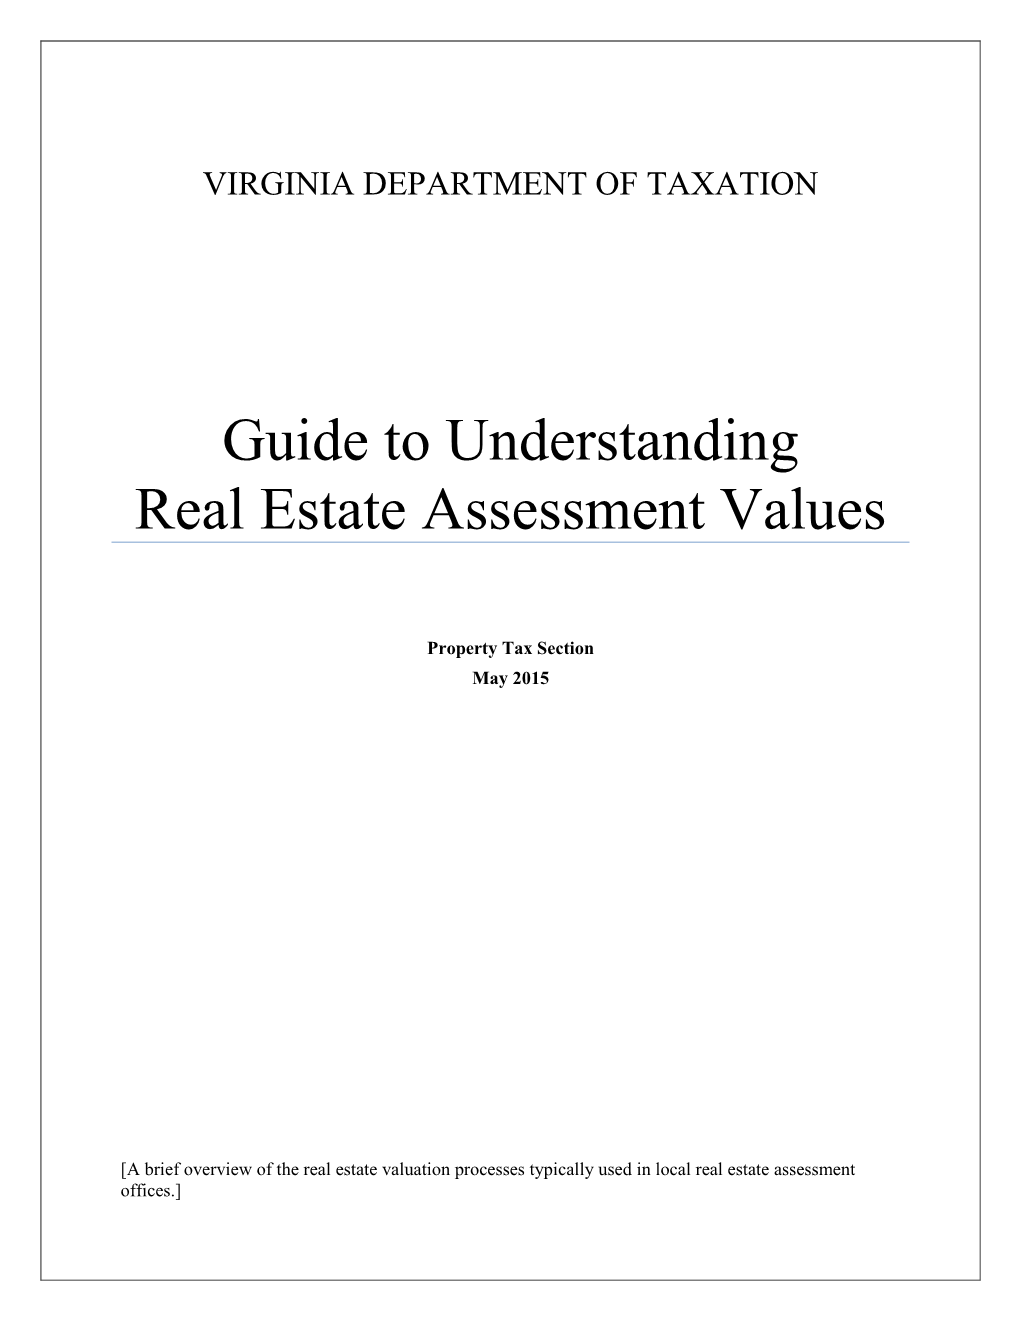 Guide for Understanding Real Estate Assessment Values